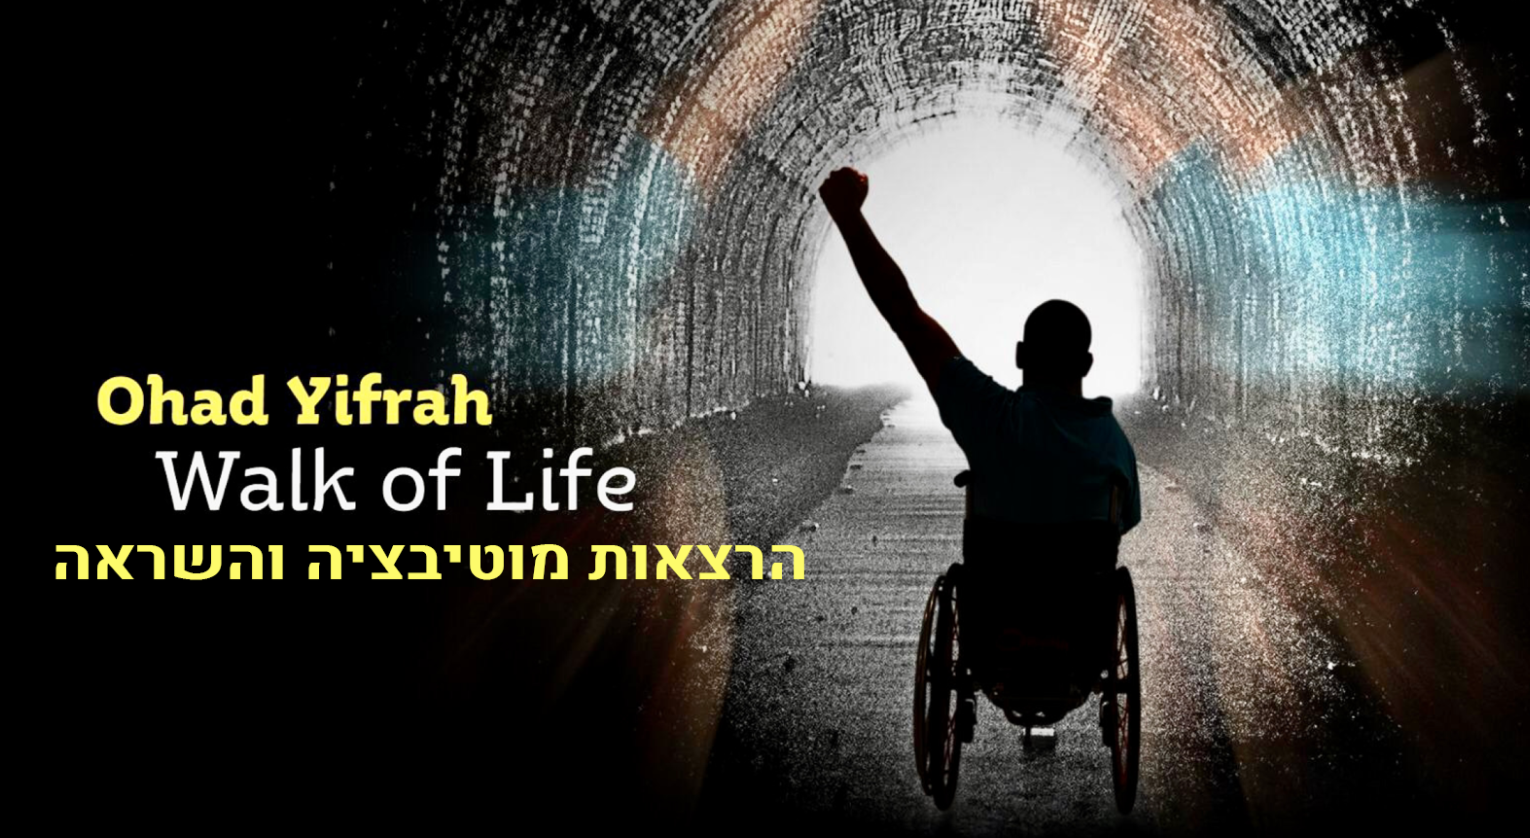 ohad yifrah - walk of life